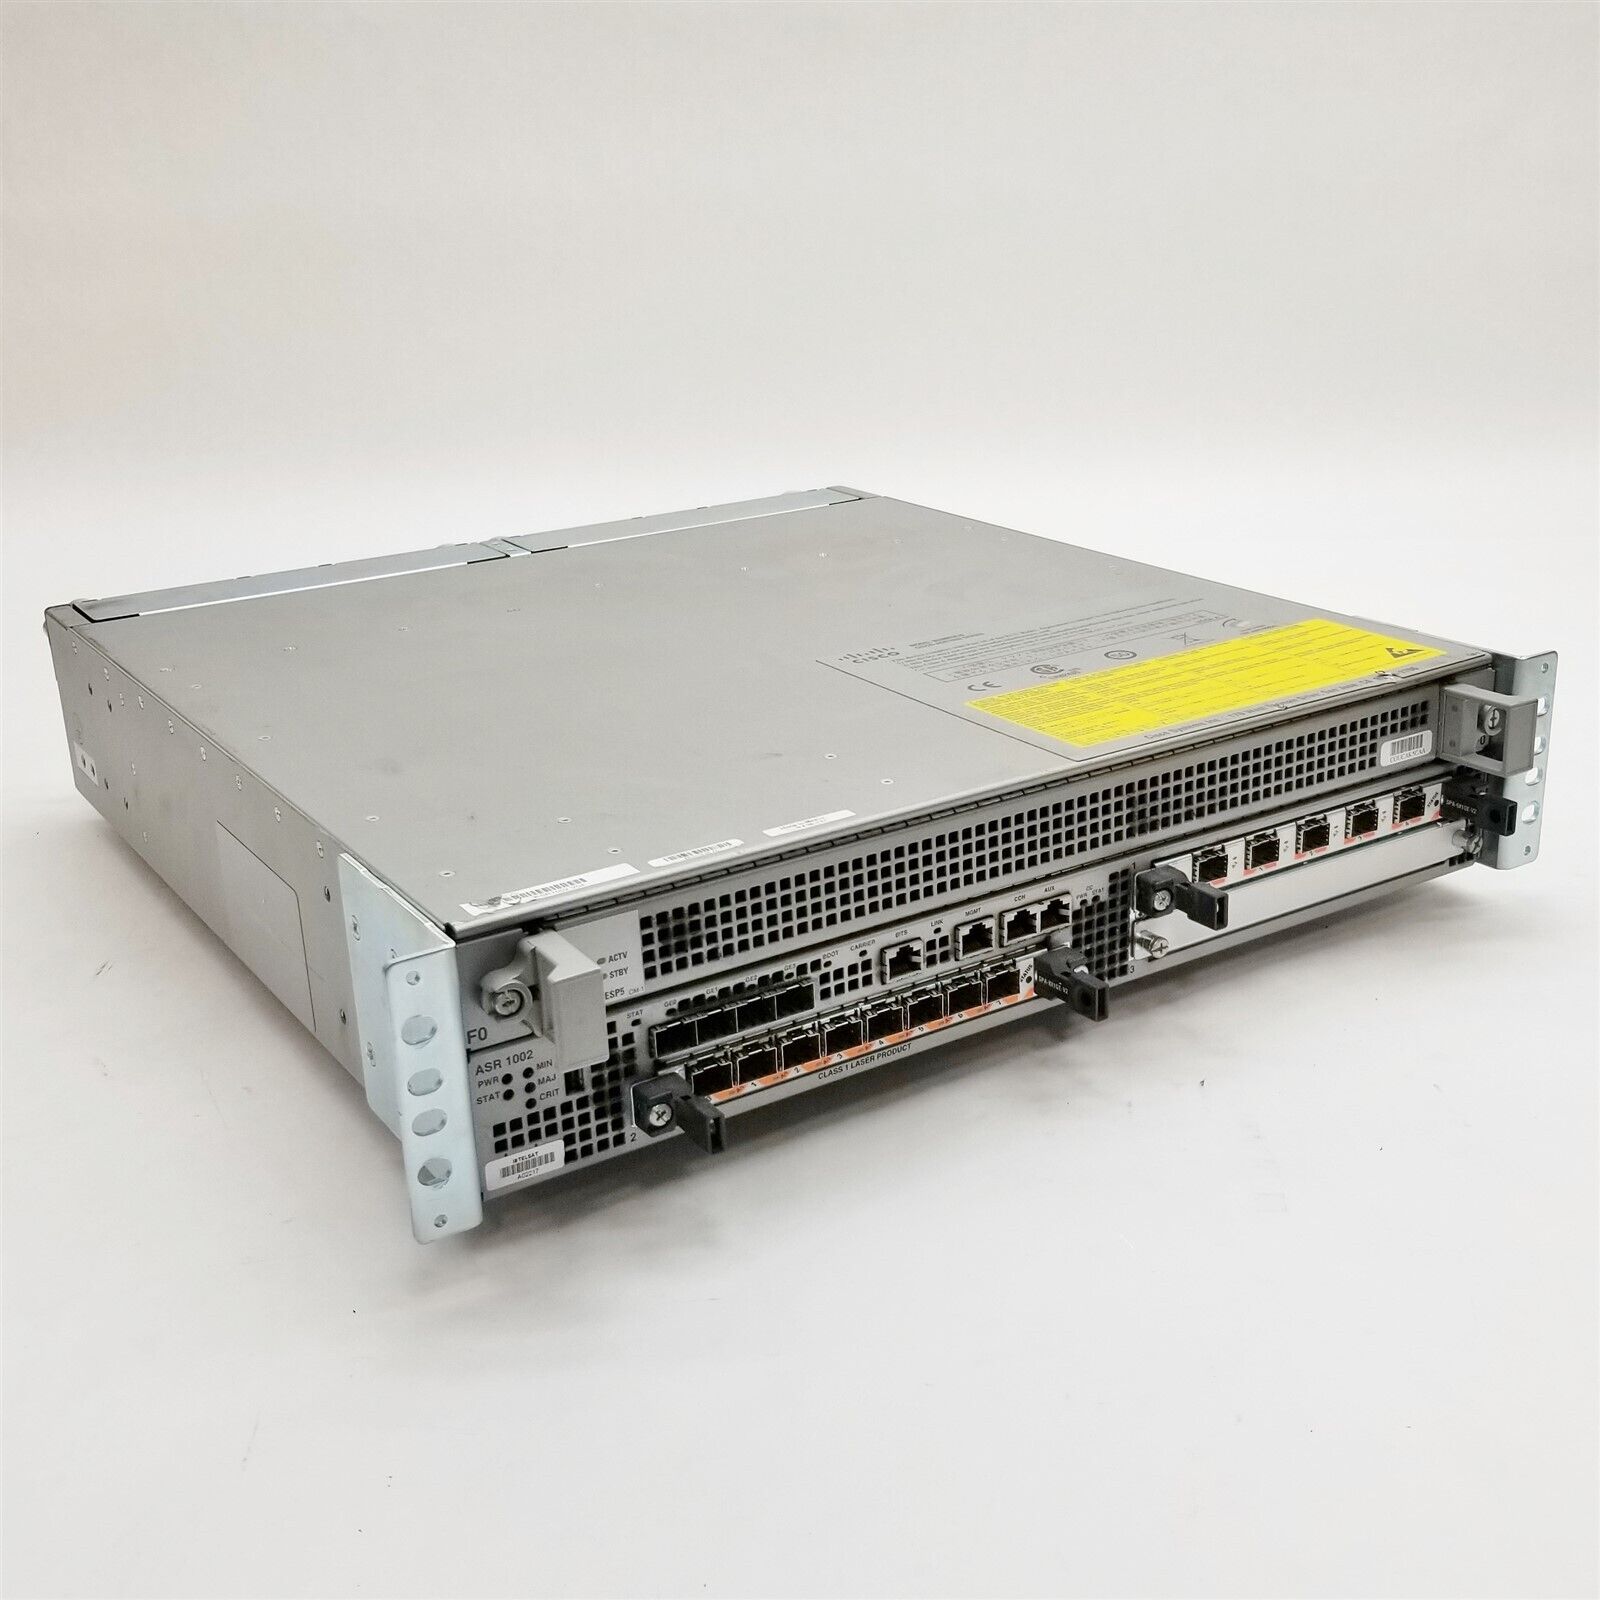 Cisco ASR1002 Aggregation Services Router w/SPA-5X1GE-V2 SPA-8X1GE-V2 Dual PSU